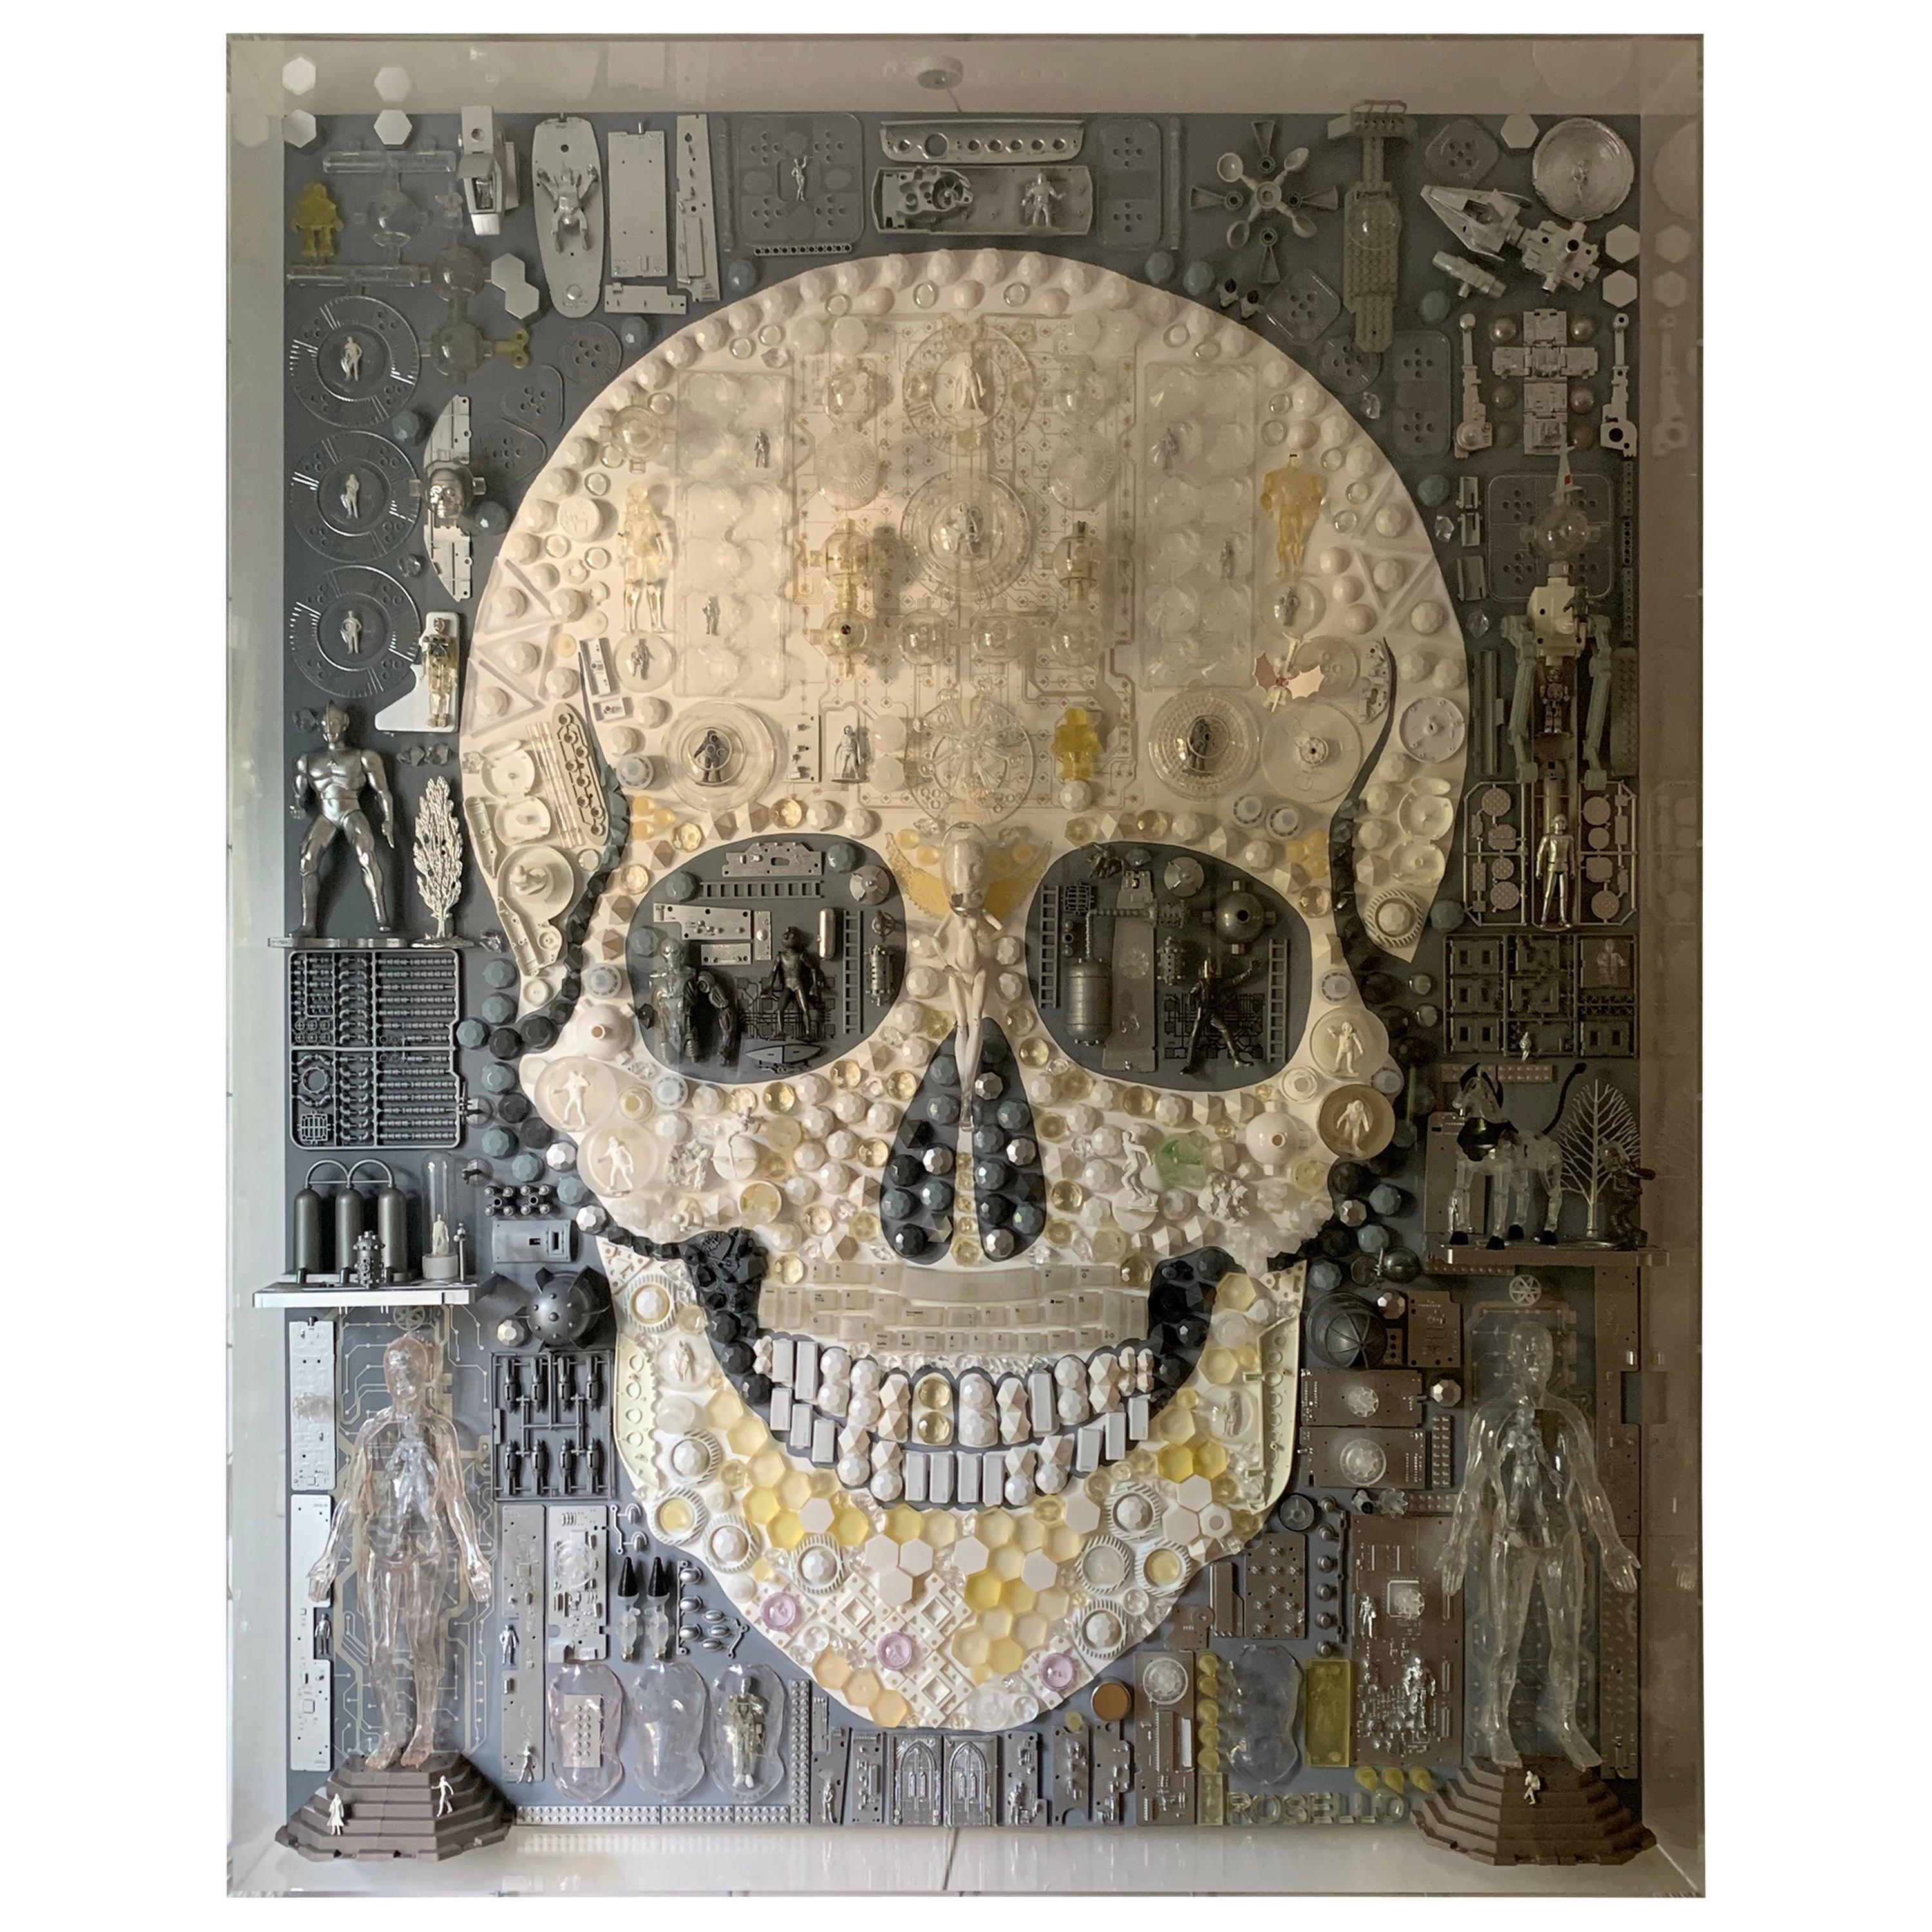 Huge Acrylic Boxed Art by Rosello “Skull”